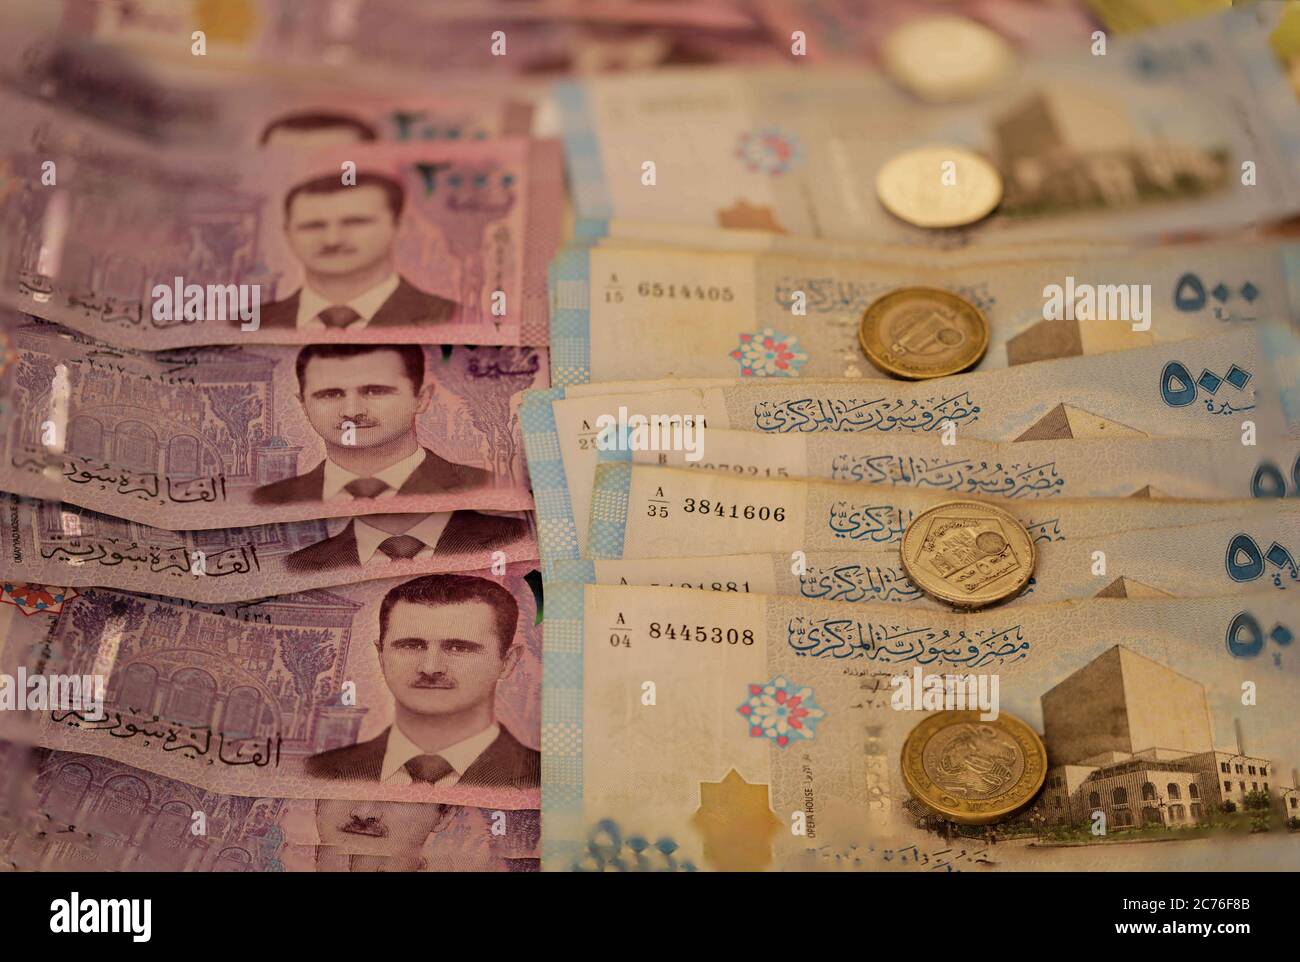 Turkey's trade in counterfeit goods booms as Lira depreciates